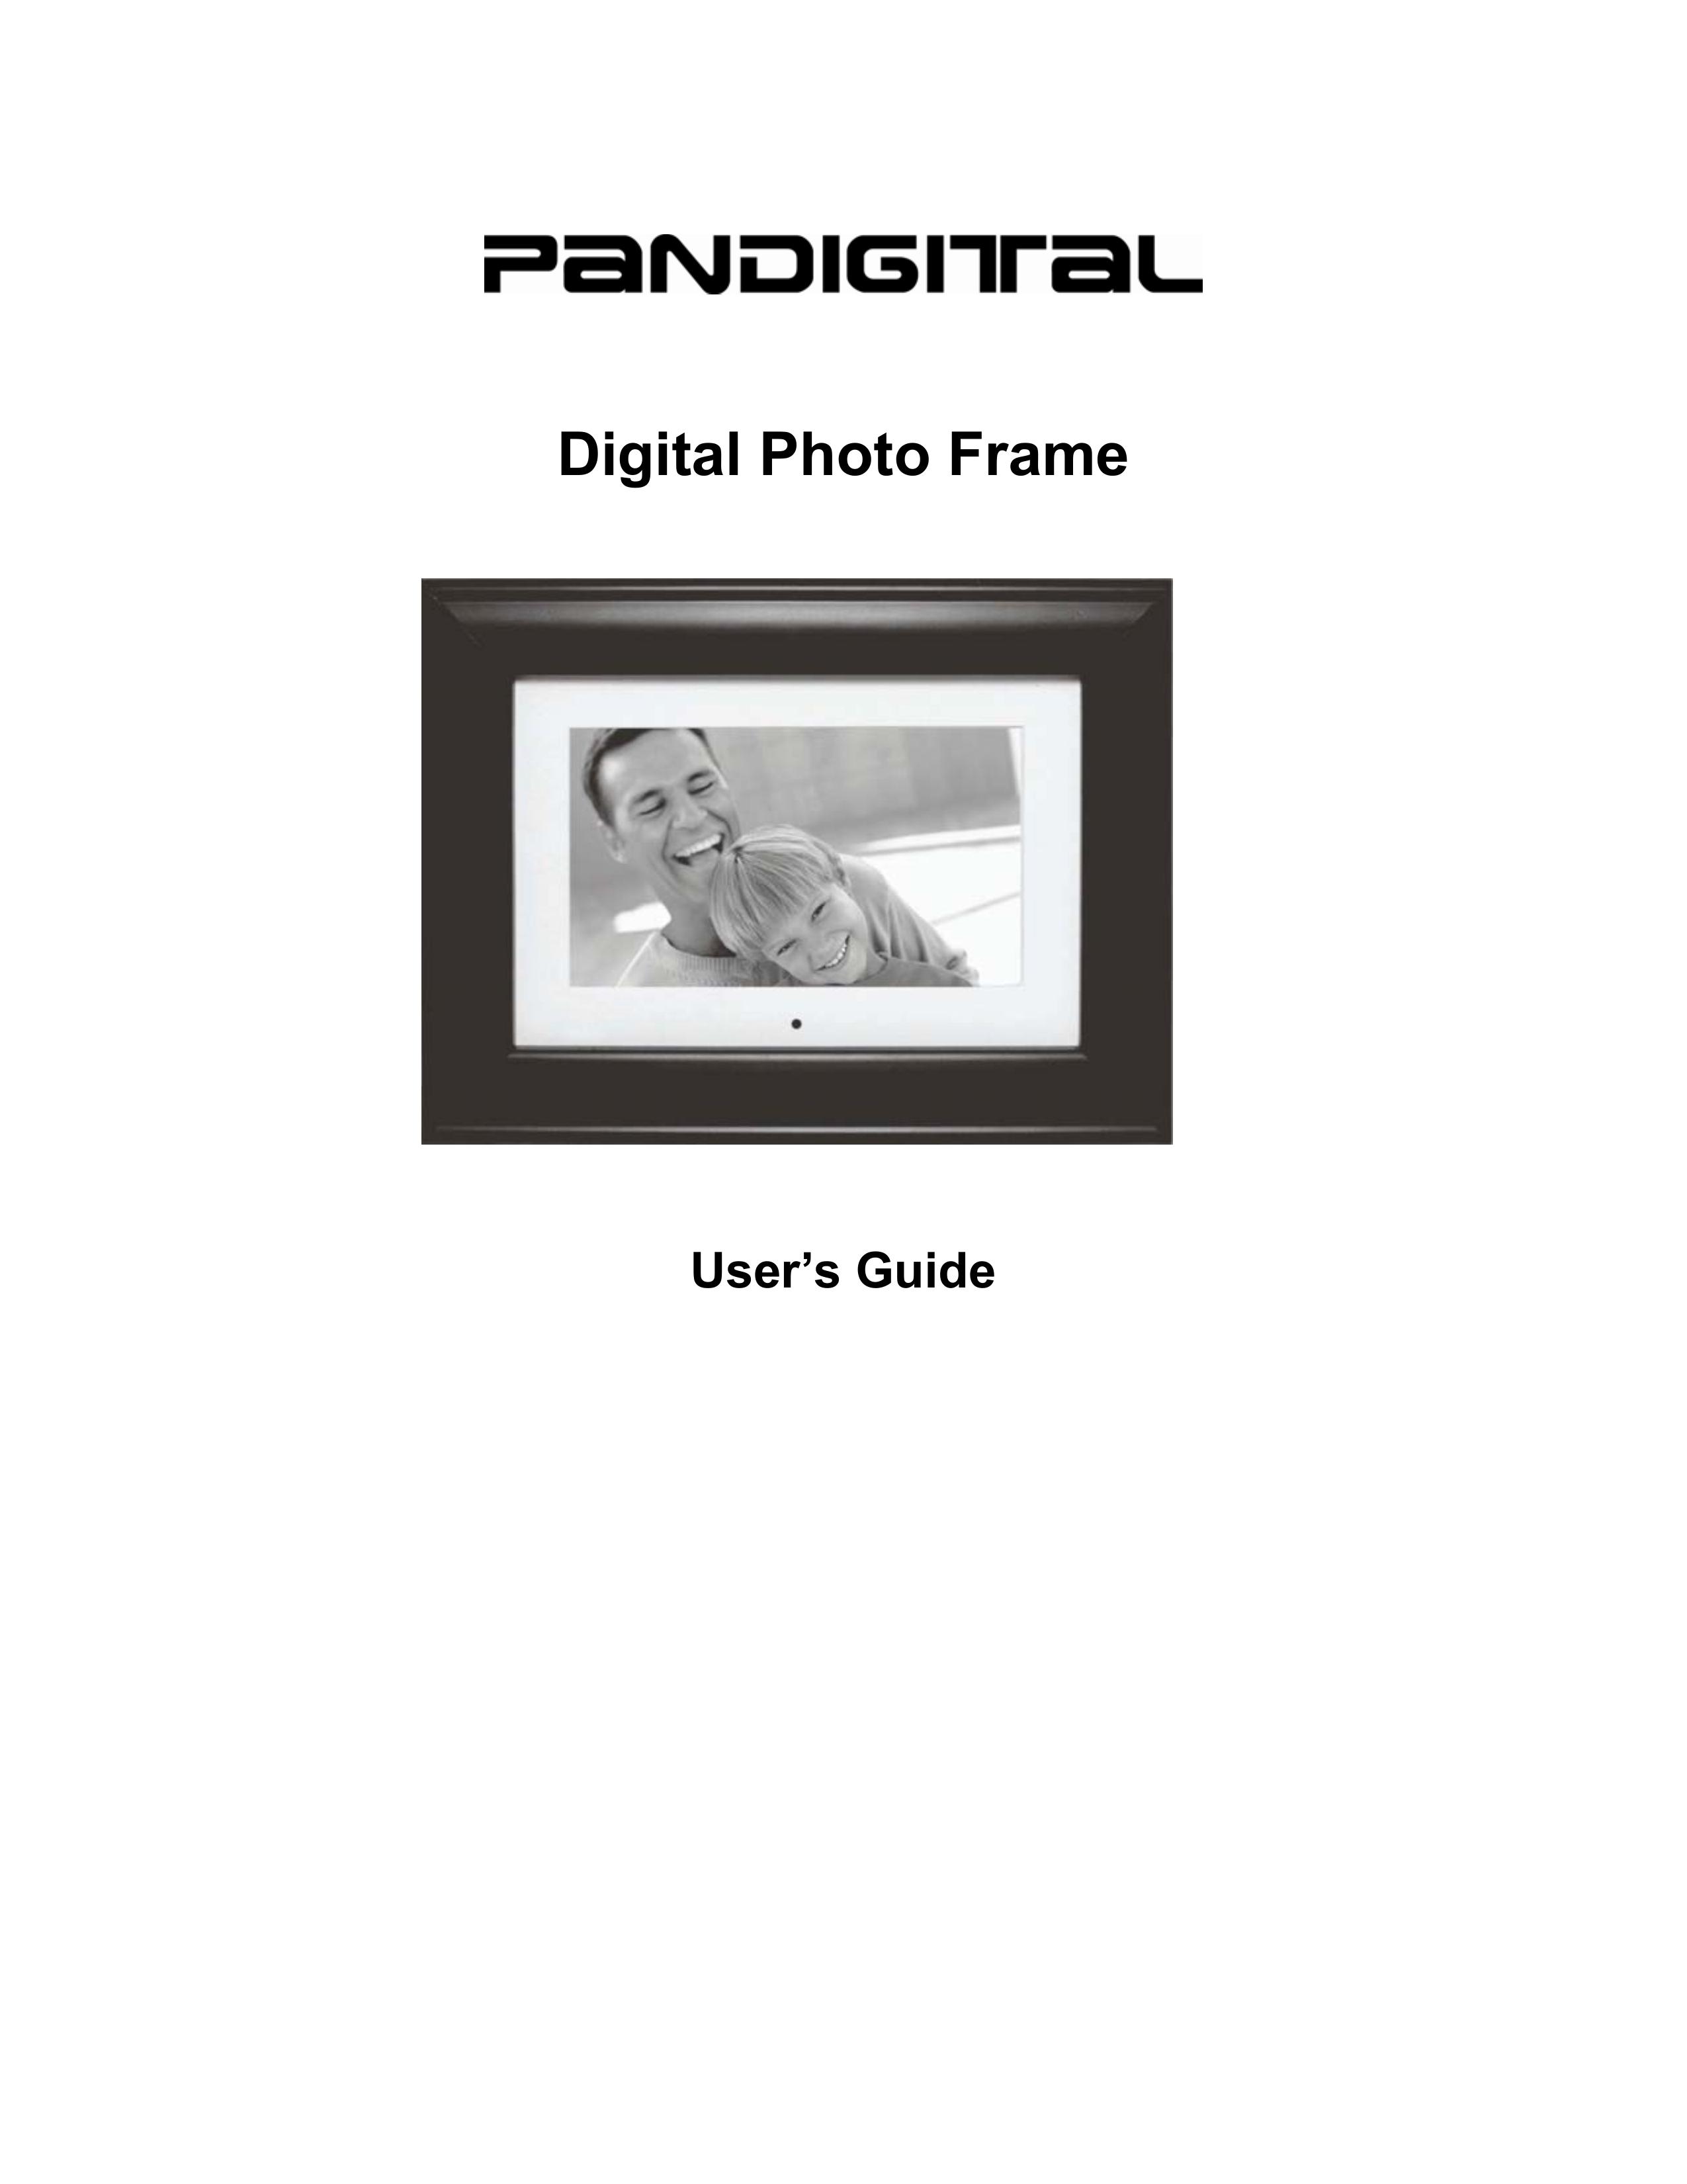 Pandigital PI8004W01-V5.2 Digital Photo Frame User Manual